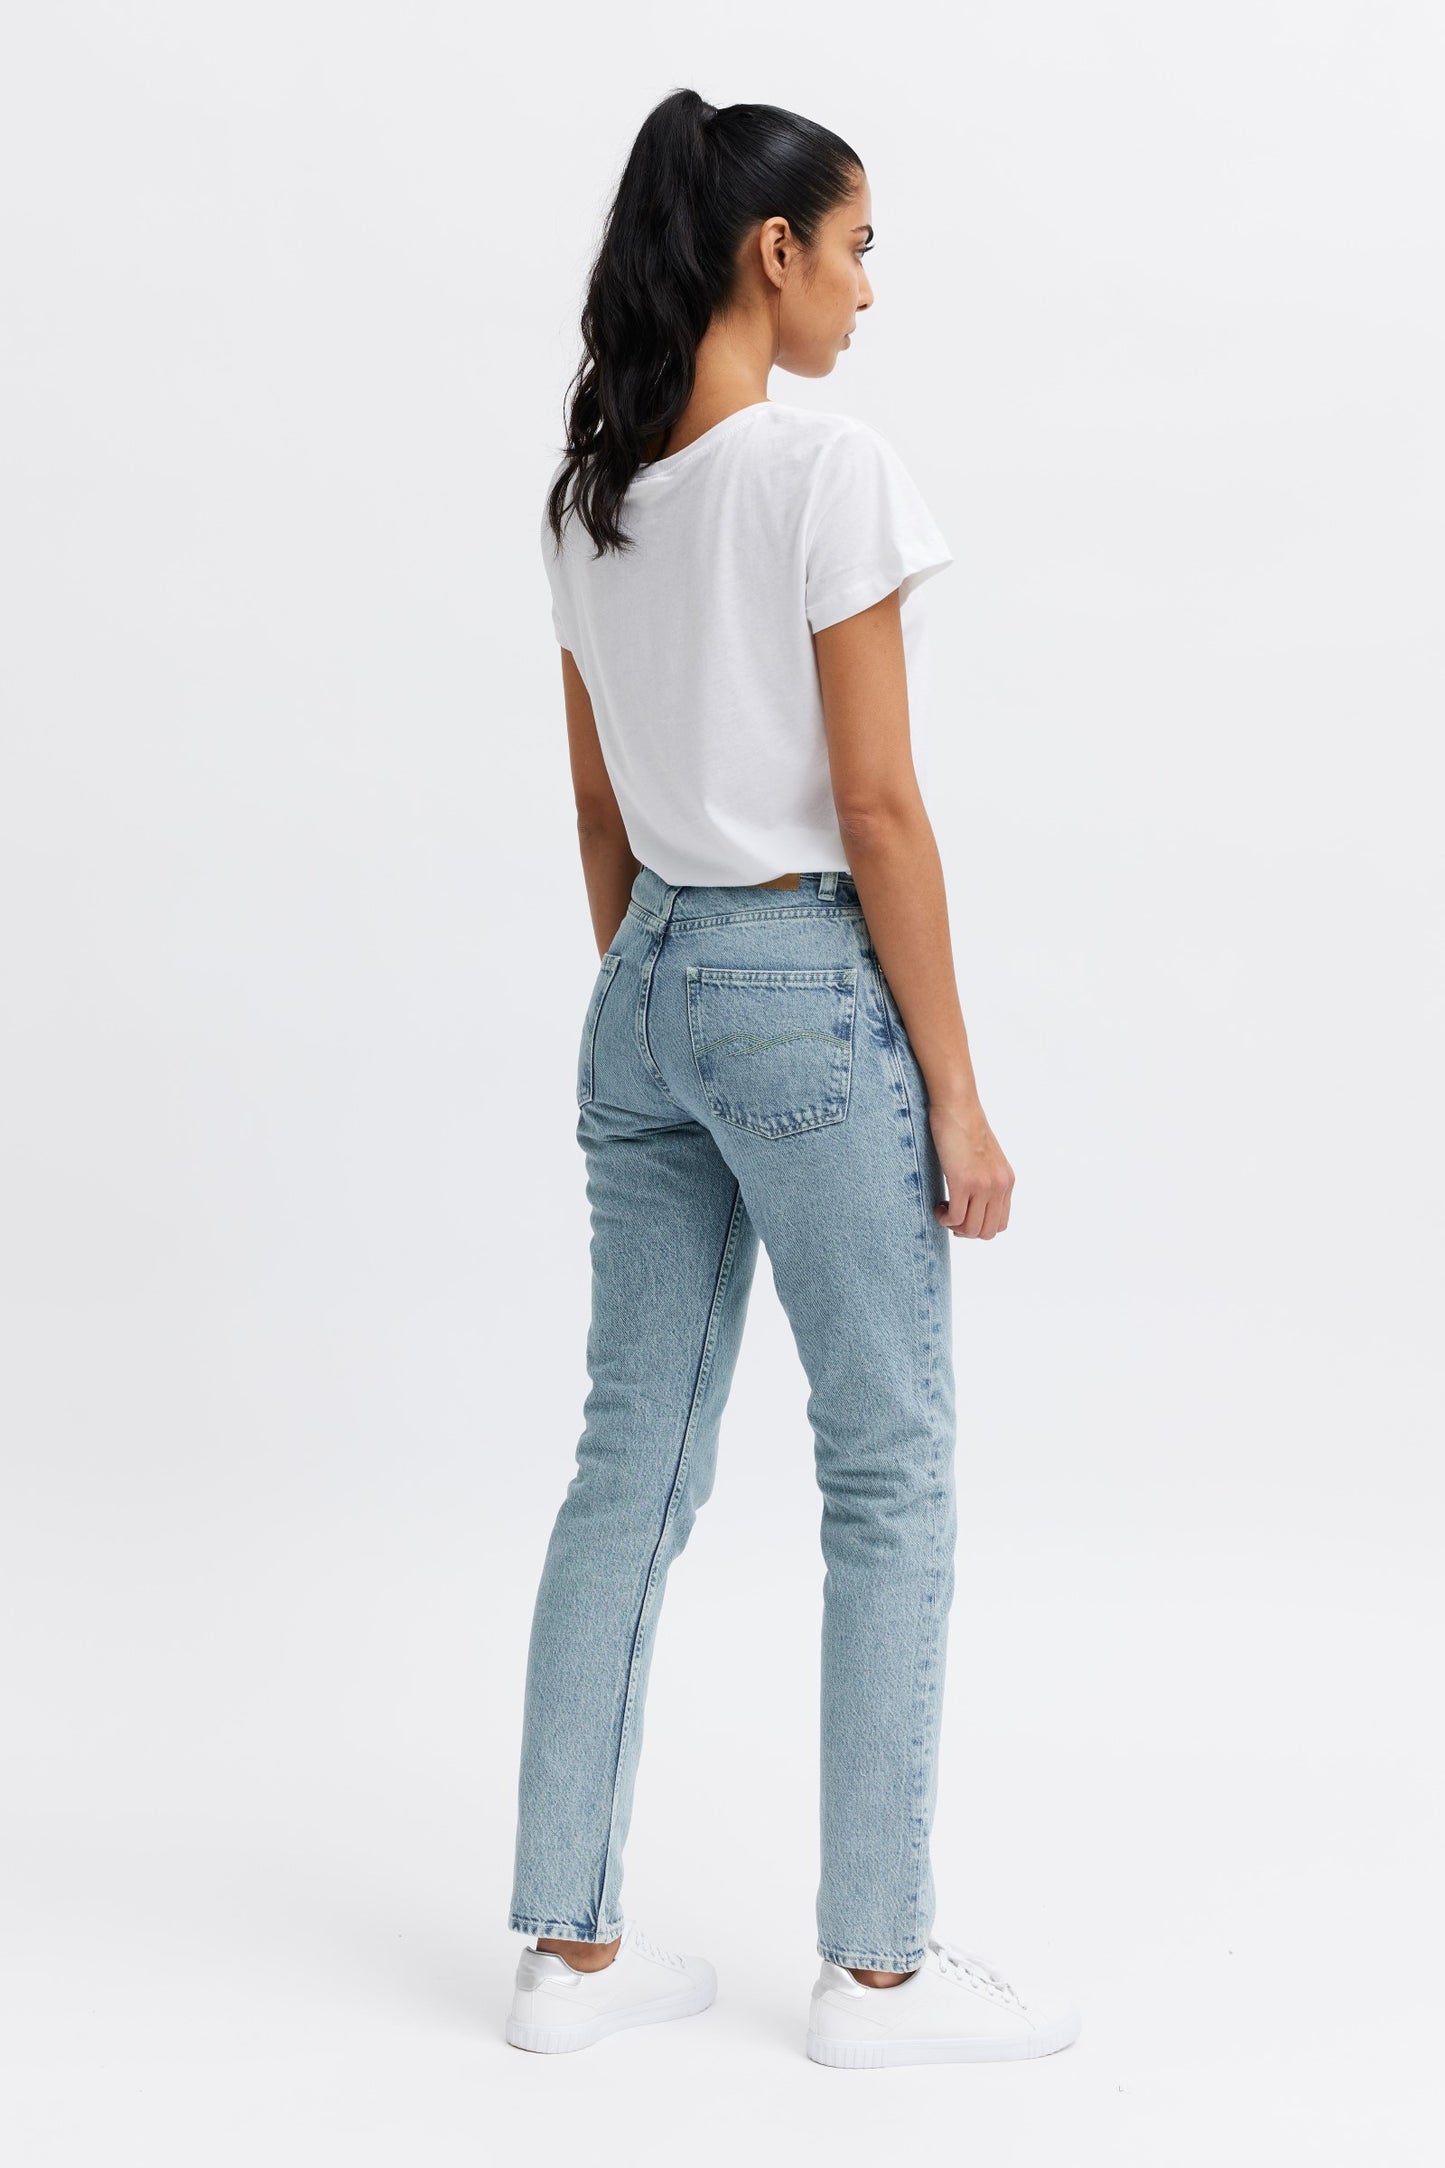 Best everyday jeans - Women's organic cotton pants